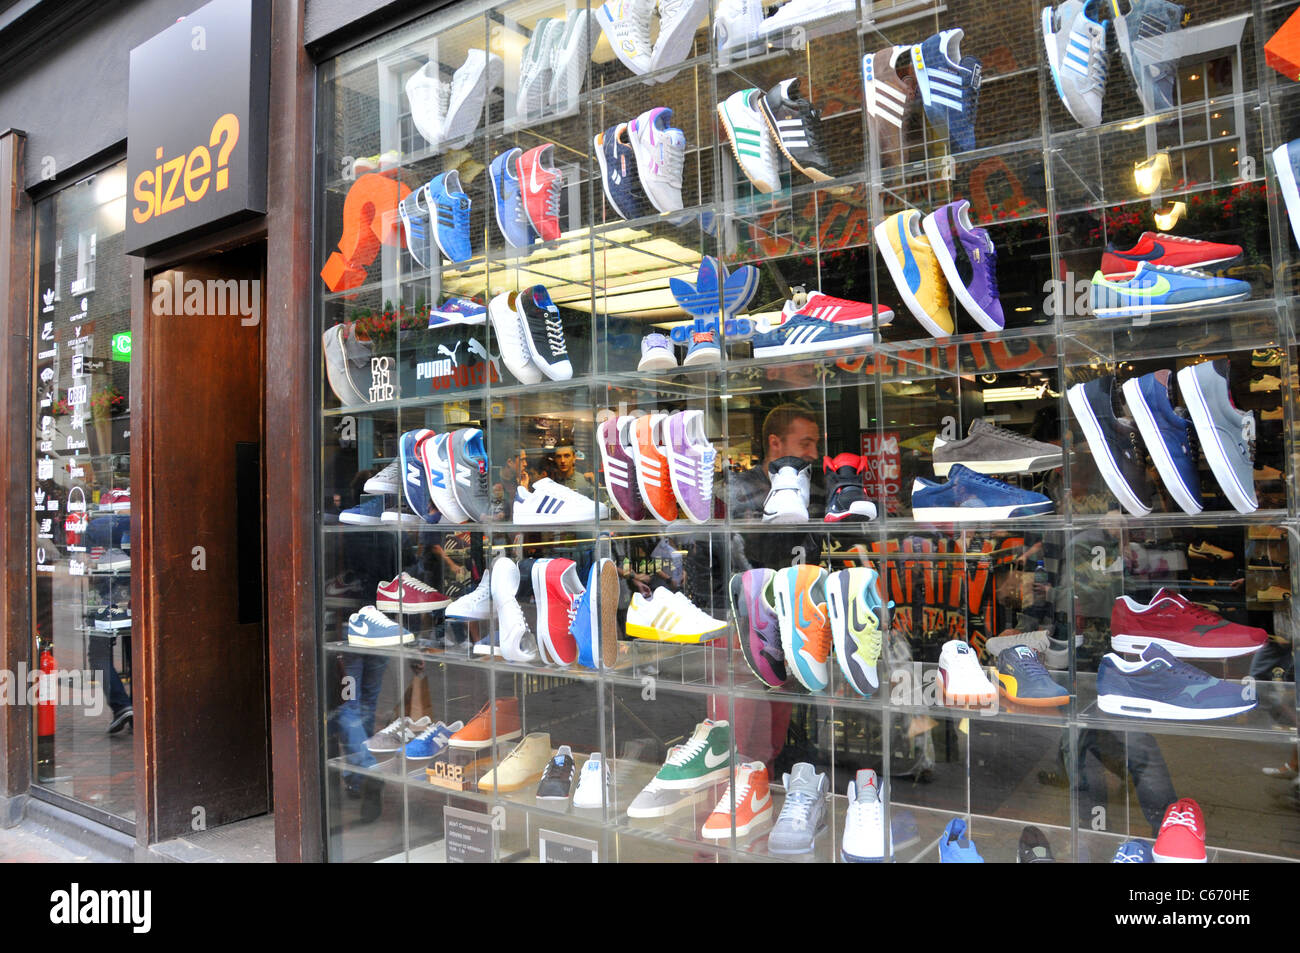 Size? shoe shop London window display Stock Photo - Alamy